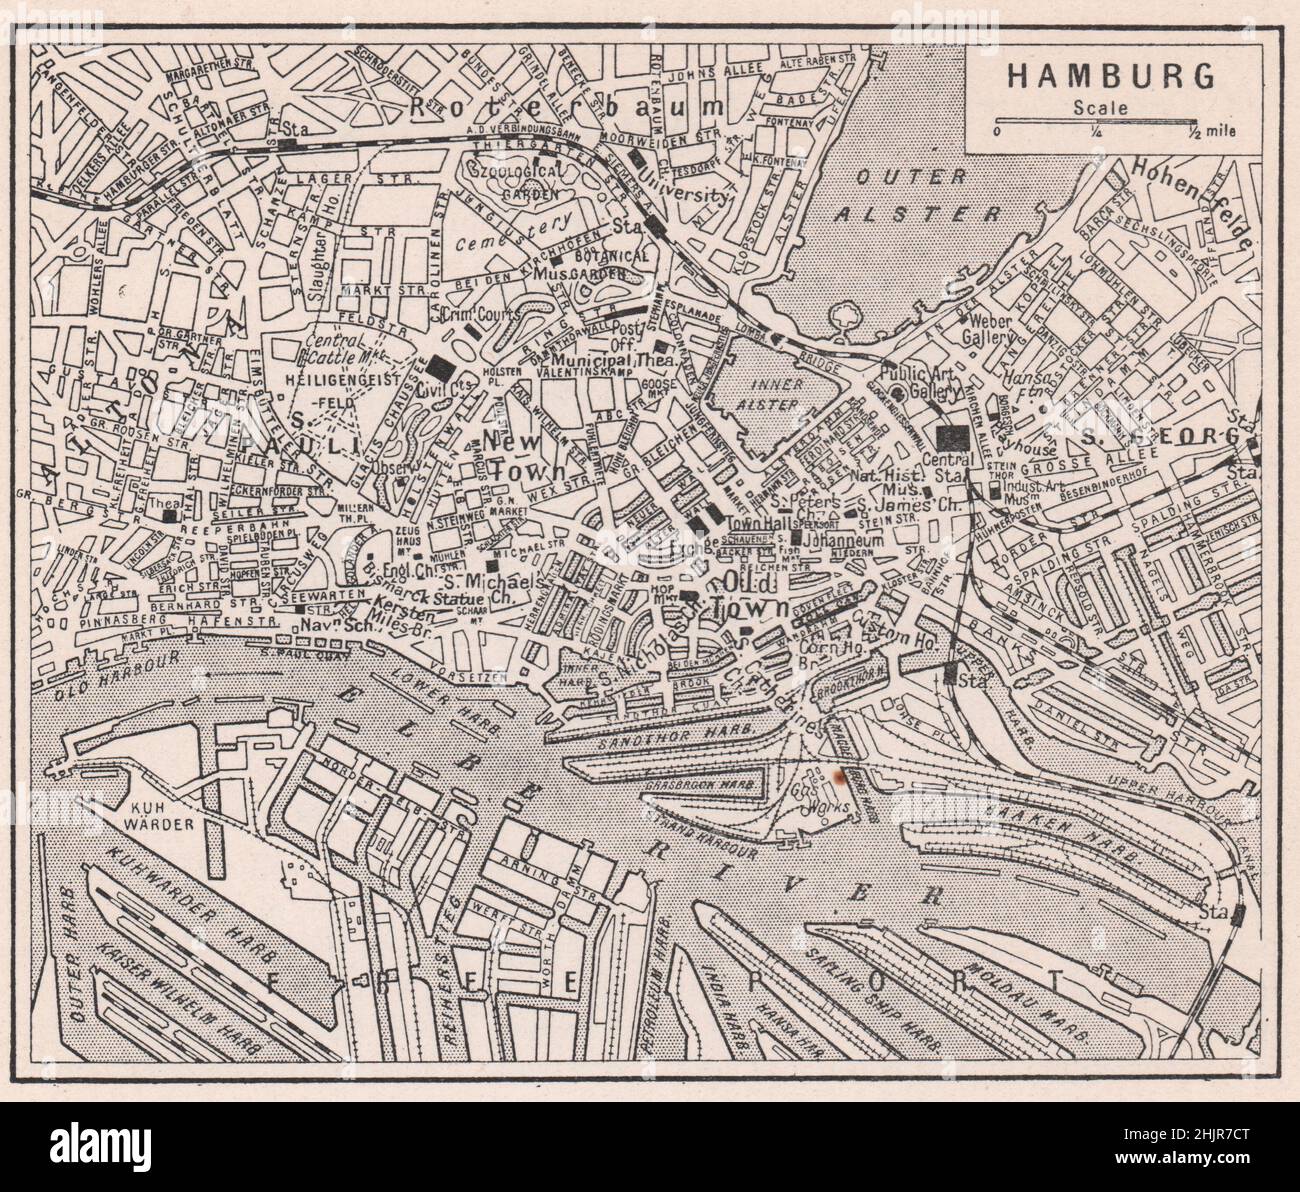 Maze of Hamburg Docks and Basins lining the Elbe. Germany (1923 map) Stock Photo